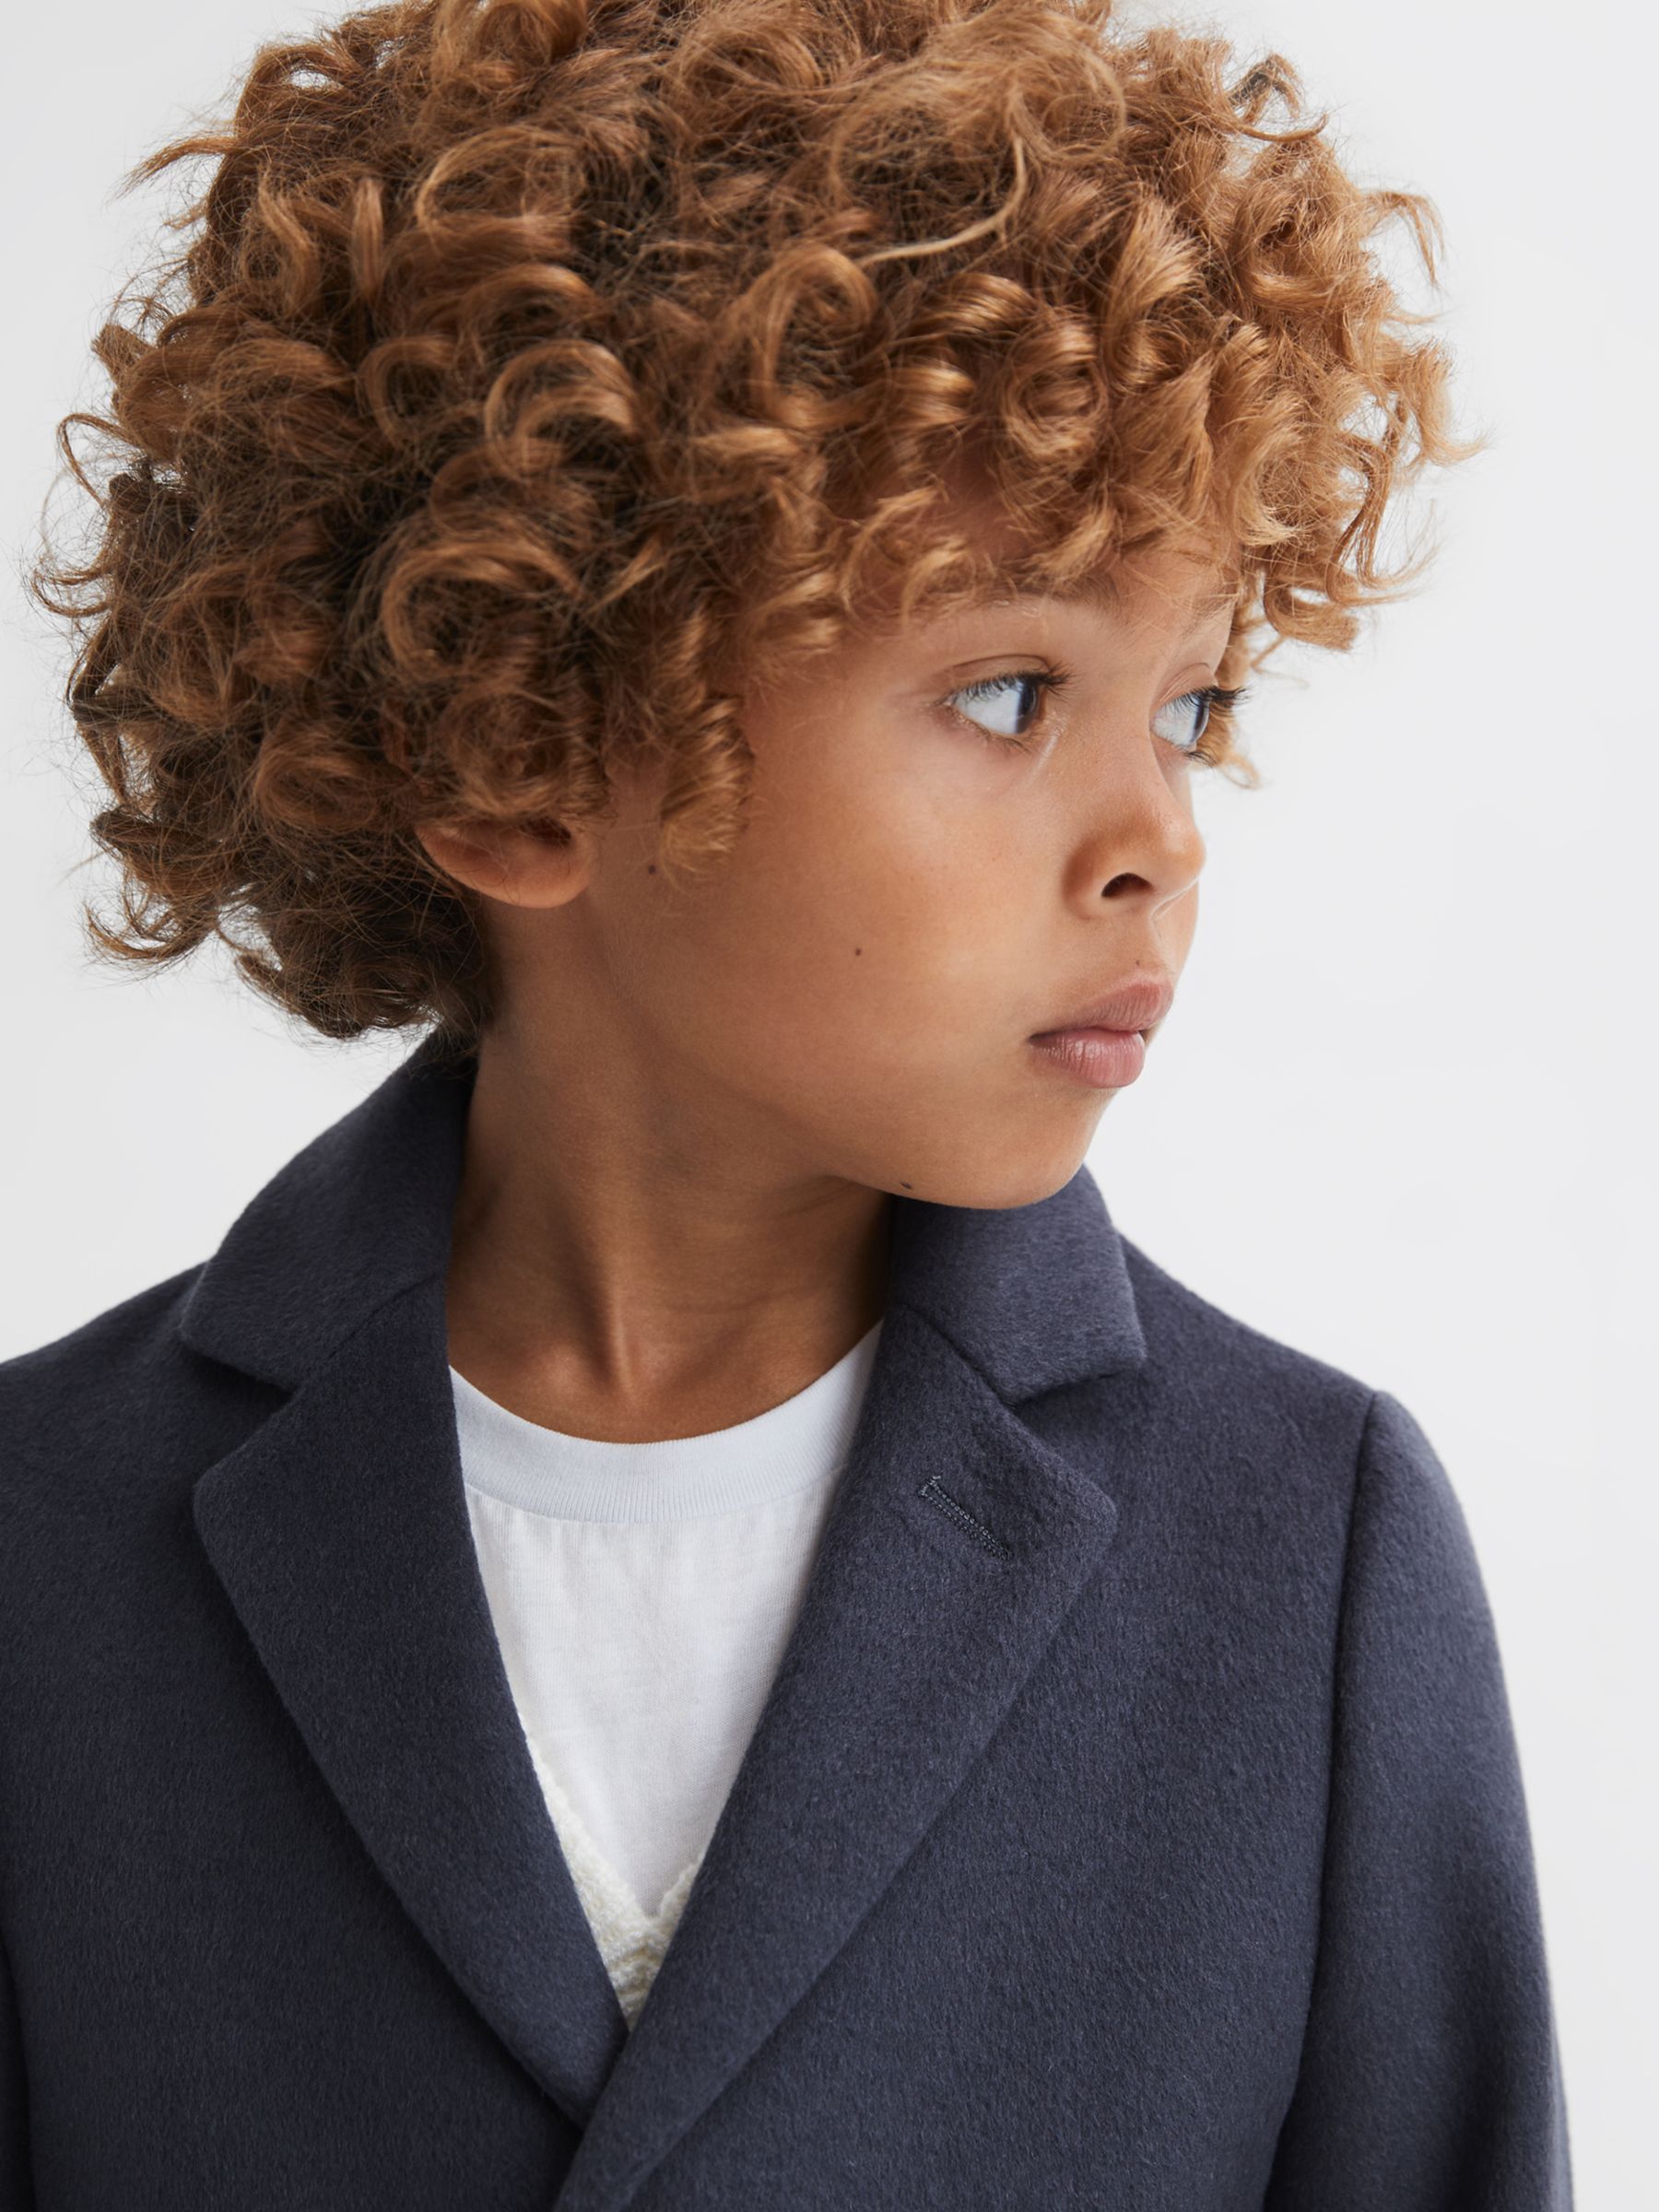 Reiss Kids' Gable Wool Blend Coat, Airforce Blue, 10-11 years